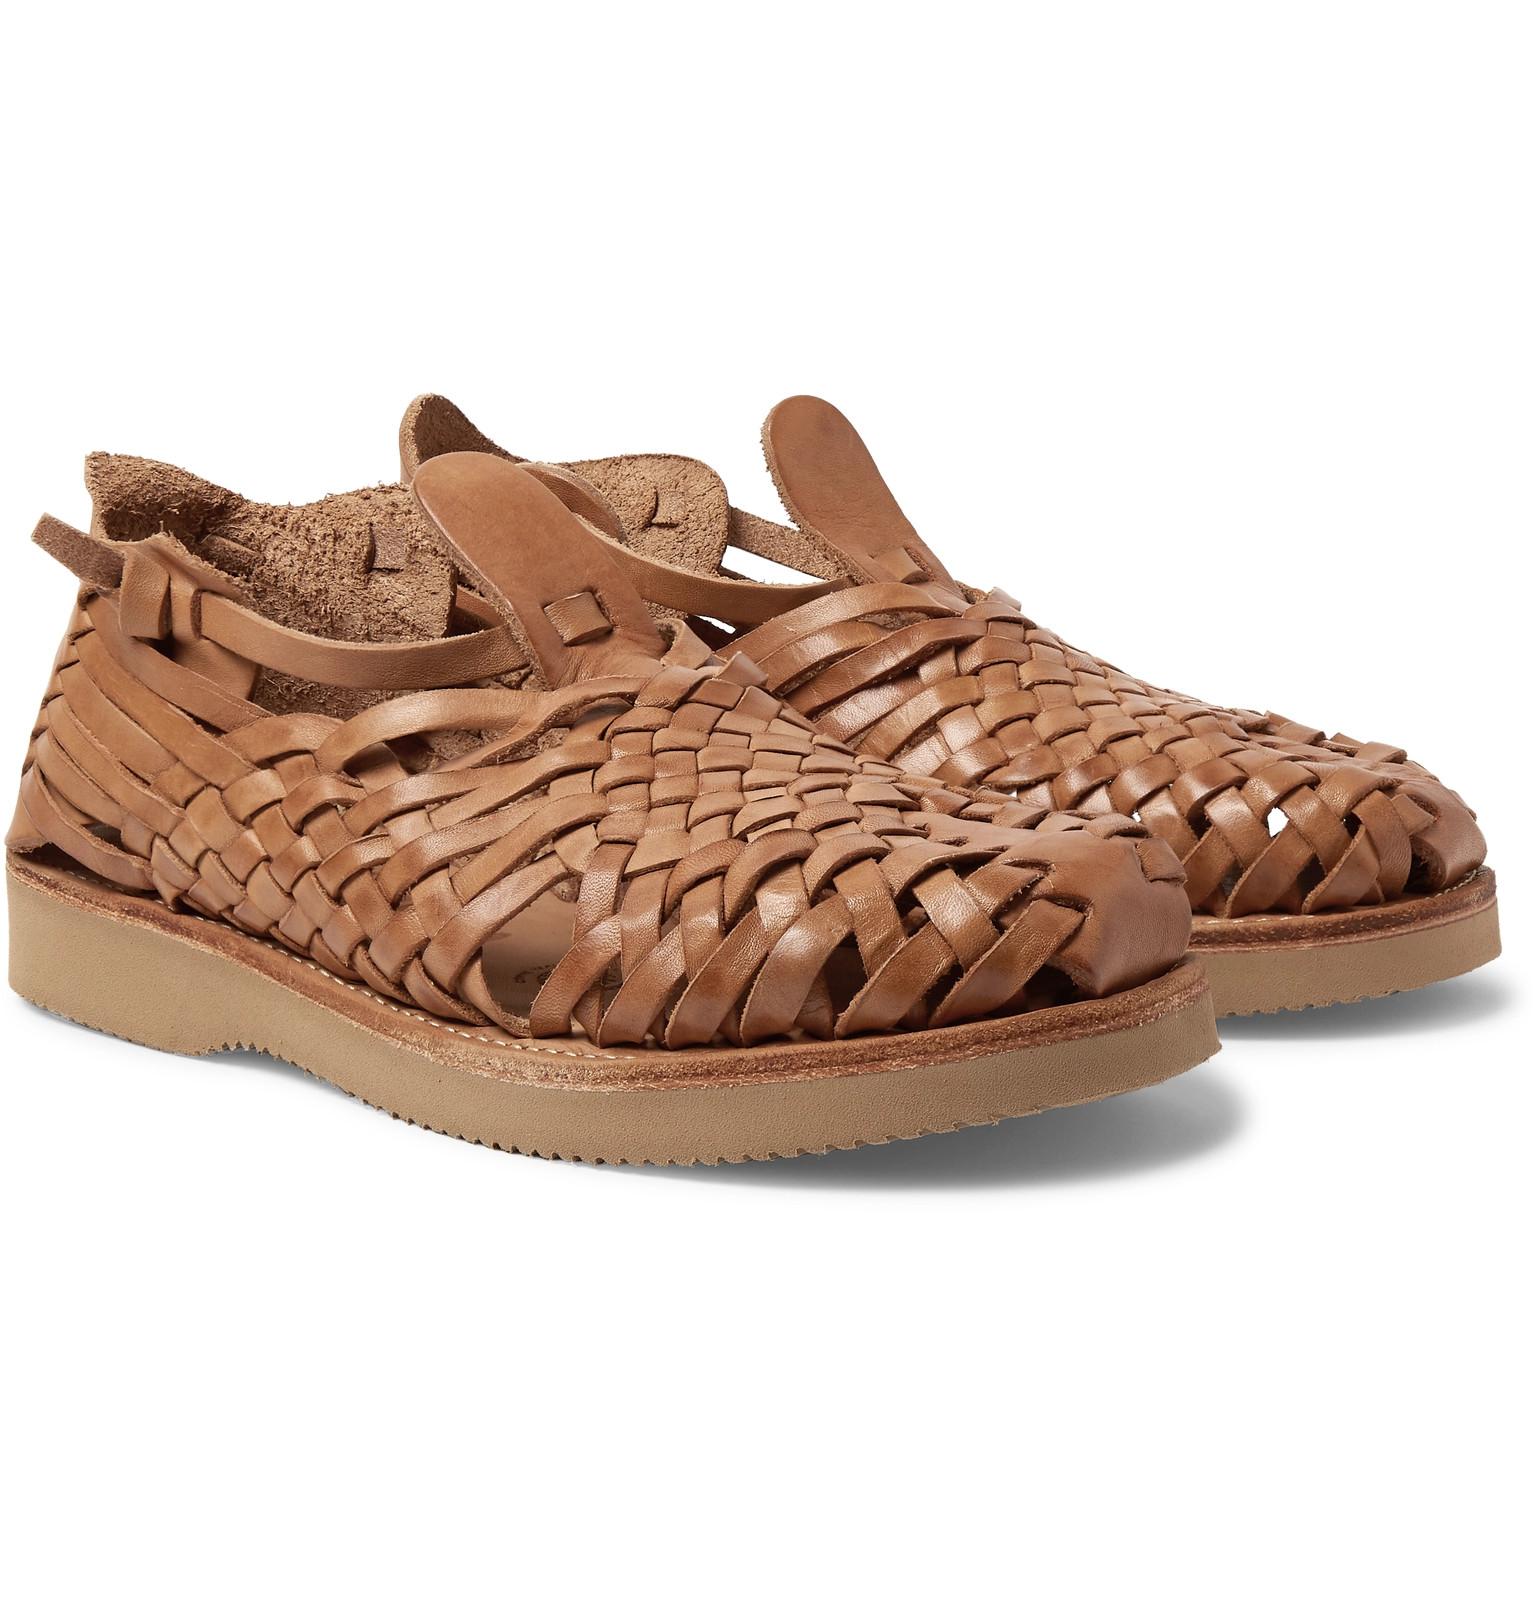 Yuketen Cruz Woven Leather Huarache Sandals in Brown for Men - Lyst